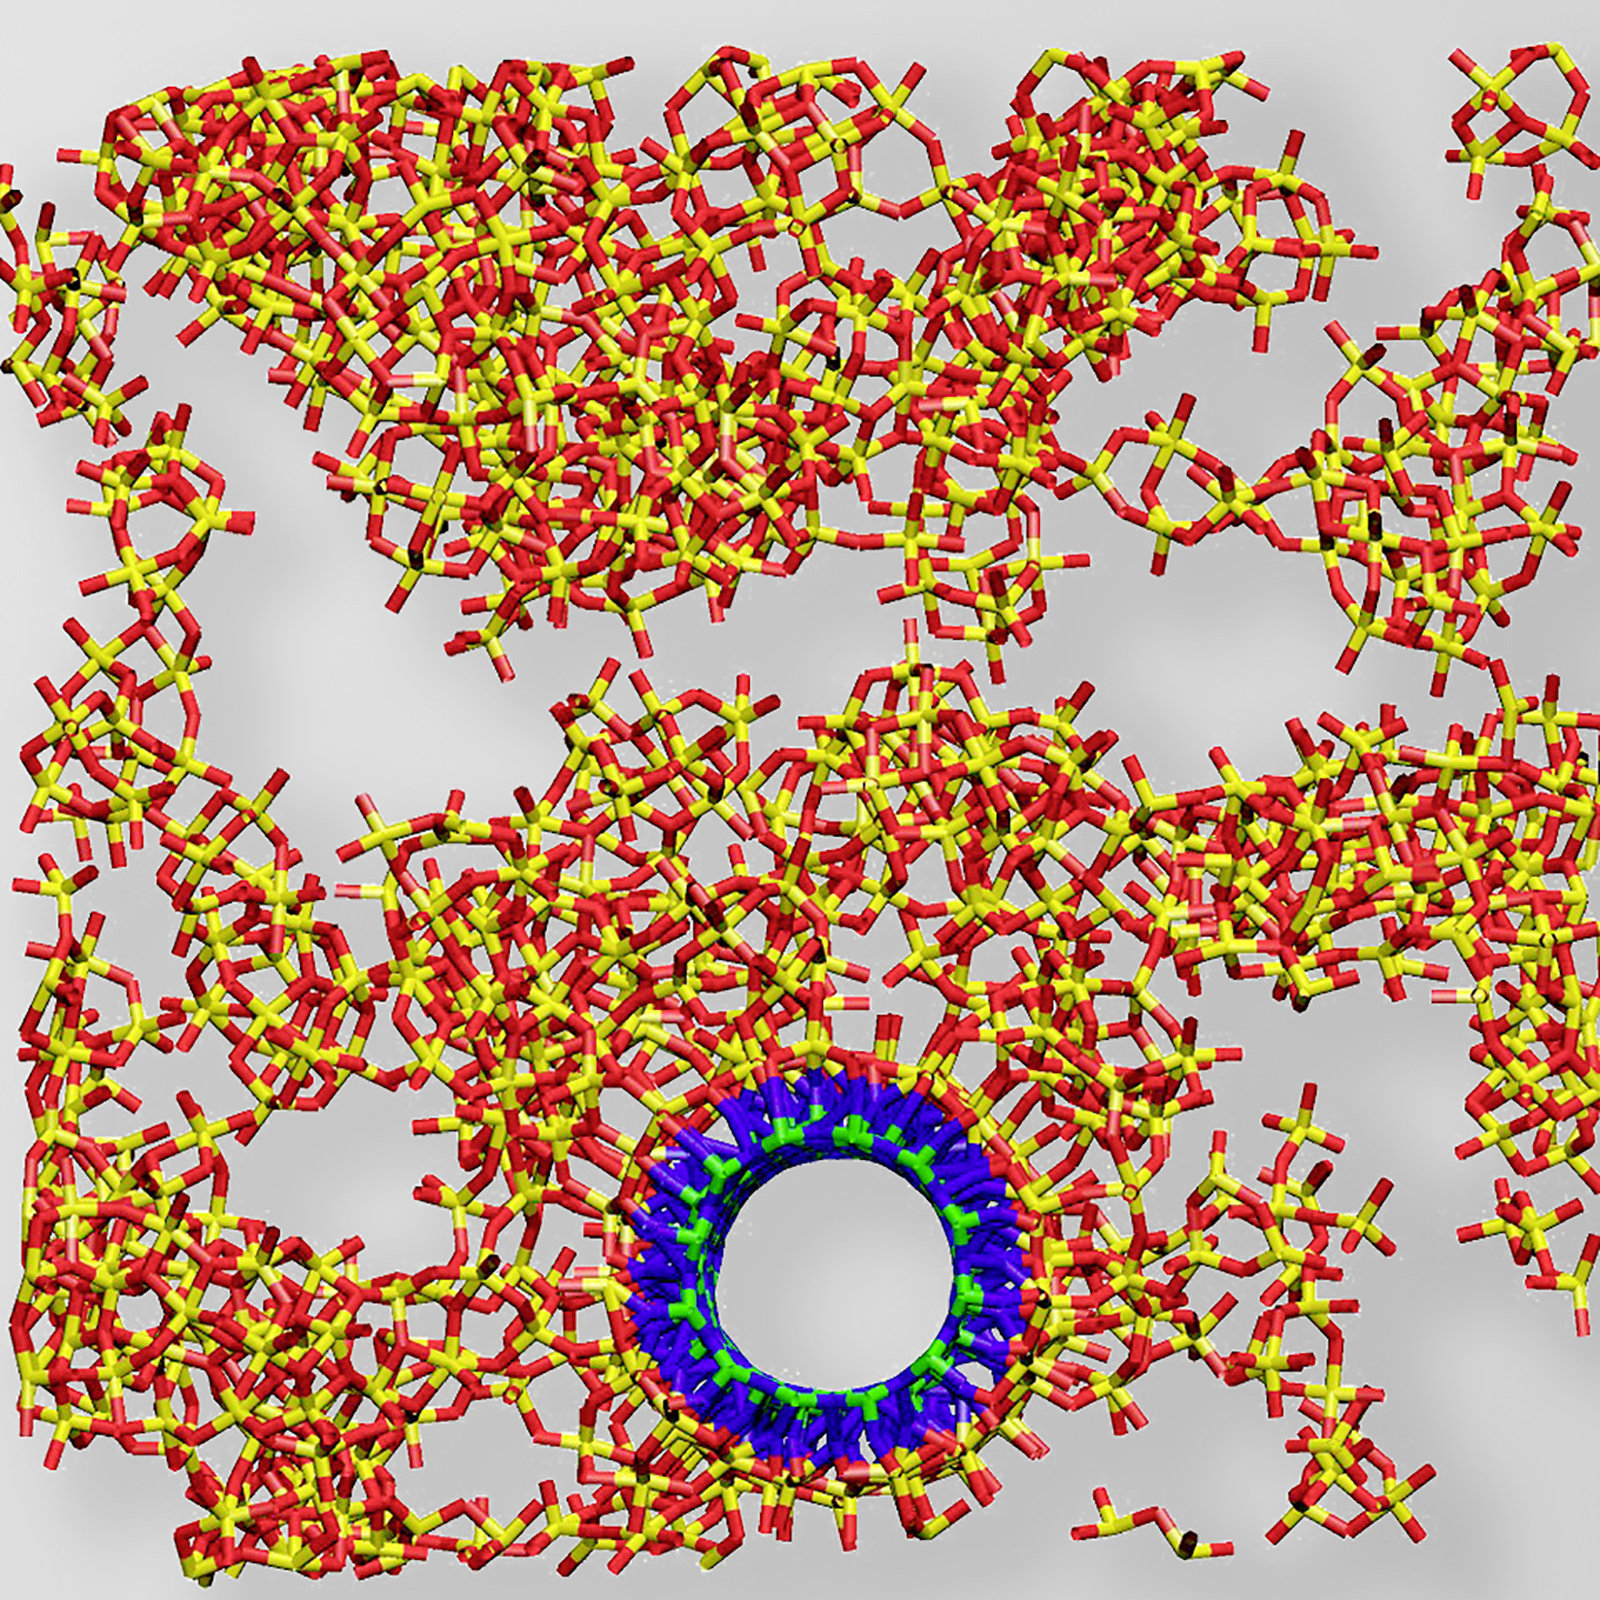 Boron nitride nanotubes in a silica matrix. Representation of reinforced nanomaterials with the Fraunhofer software.